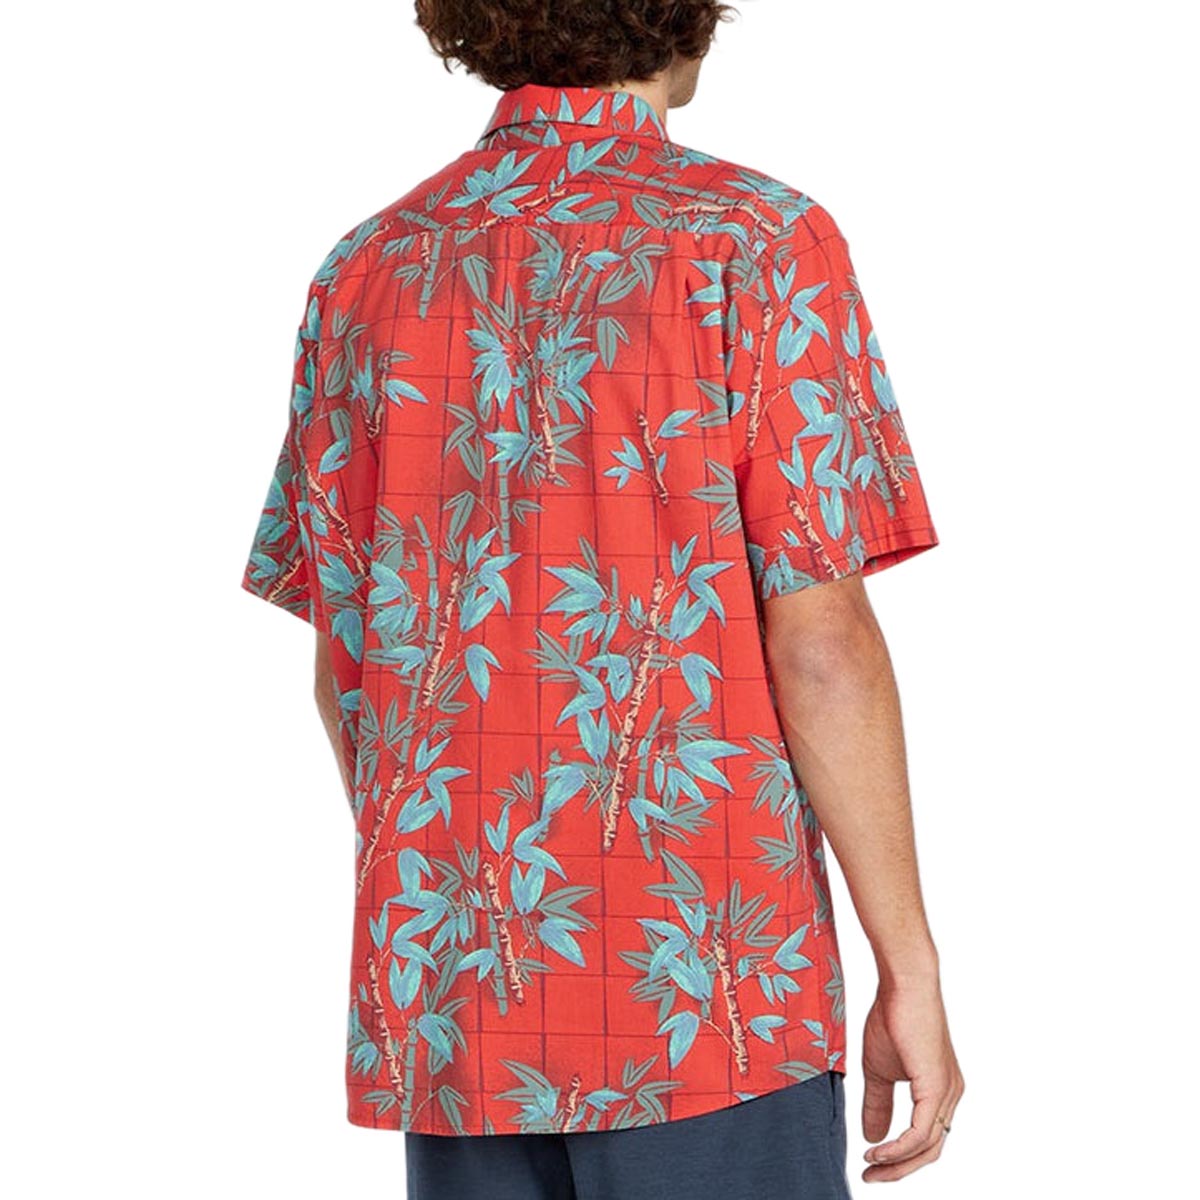 Volcom Bamboozeled Floral Shirt - Flash Red image 2